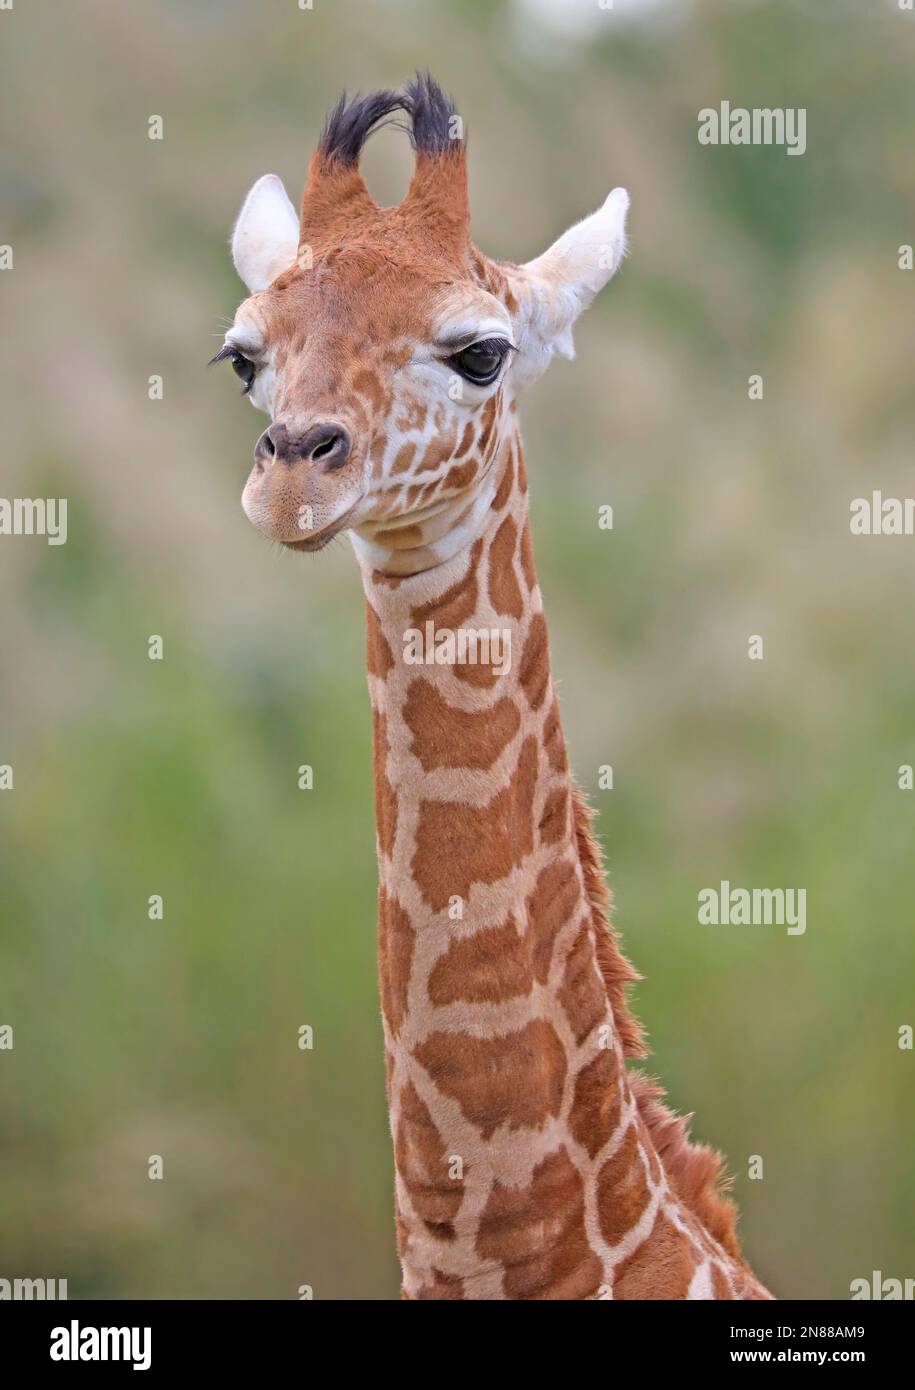 Baby Giraffe head close up Stock Photo